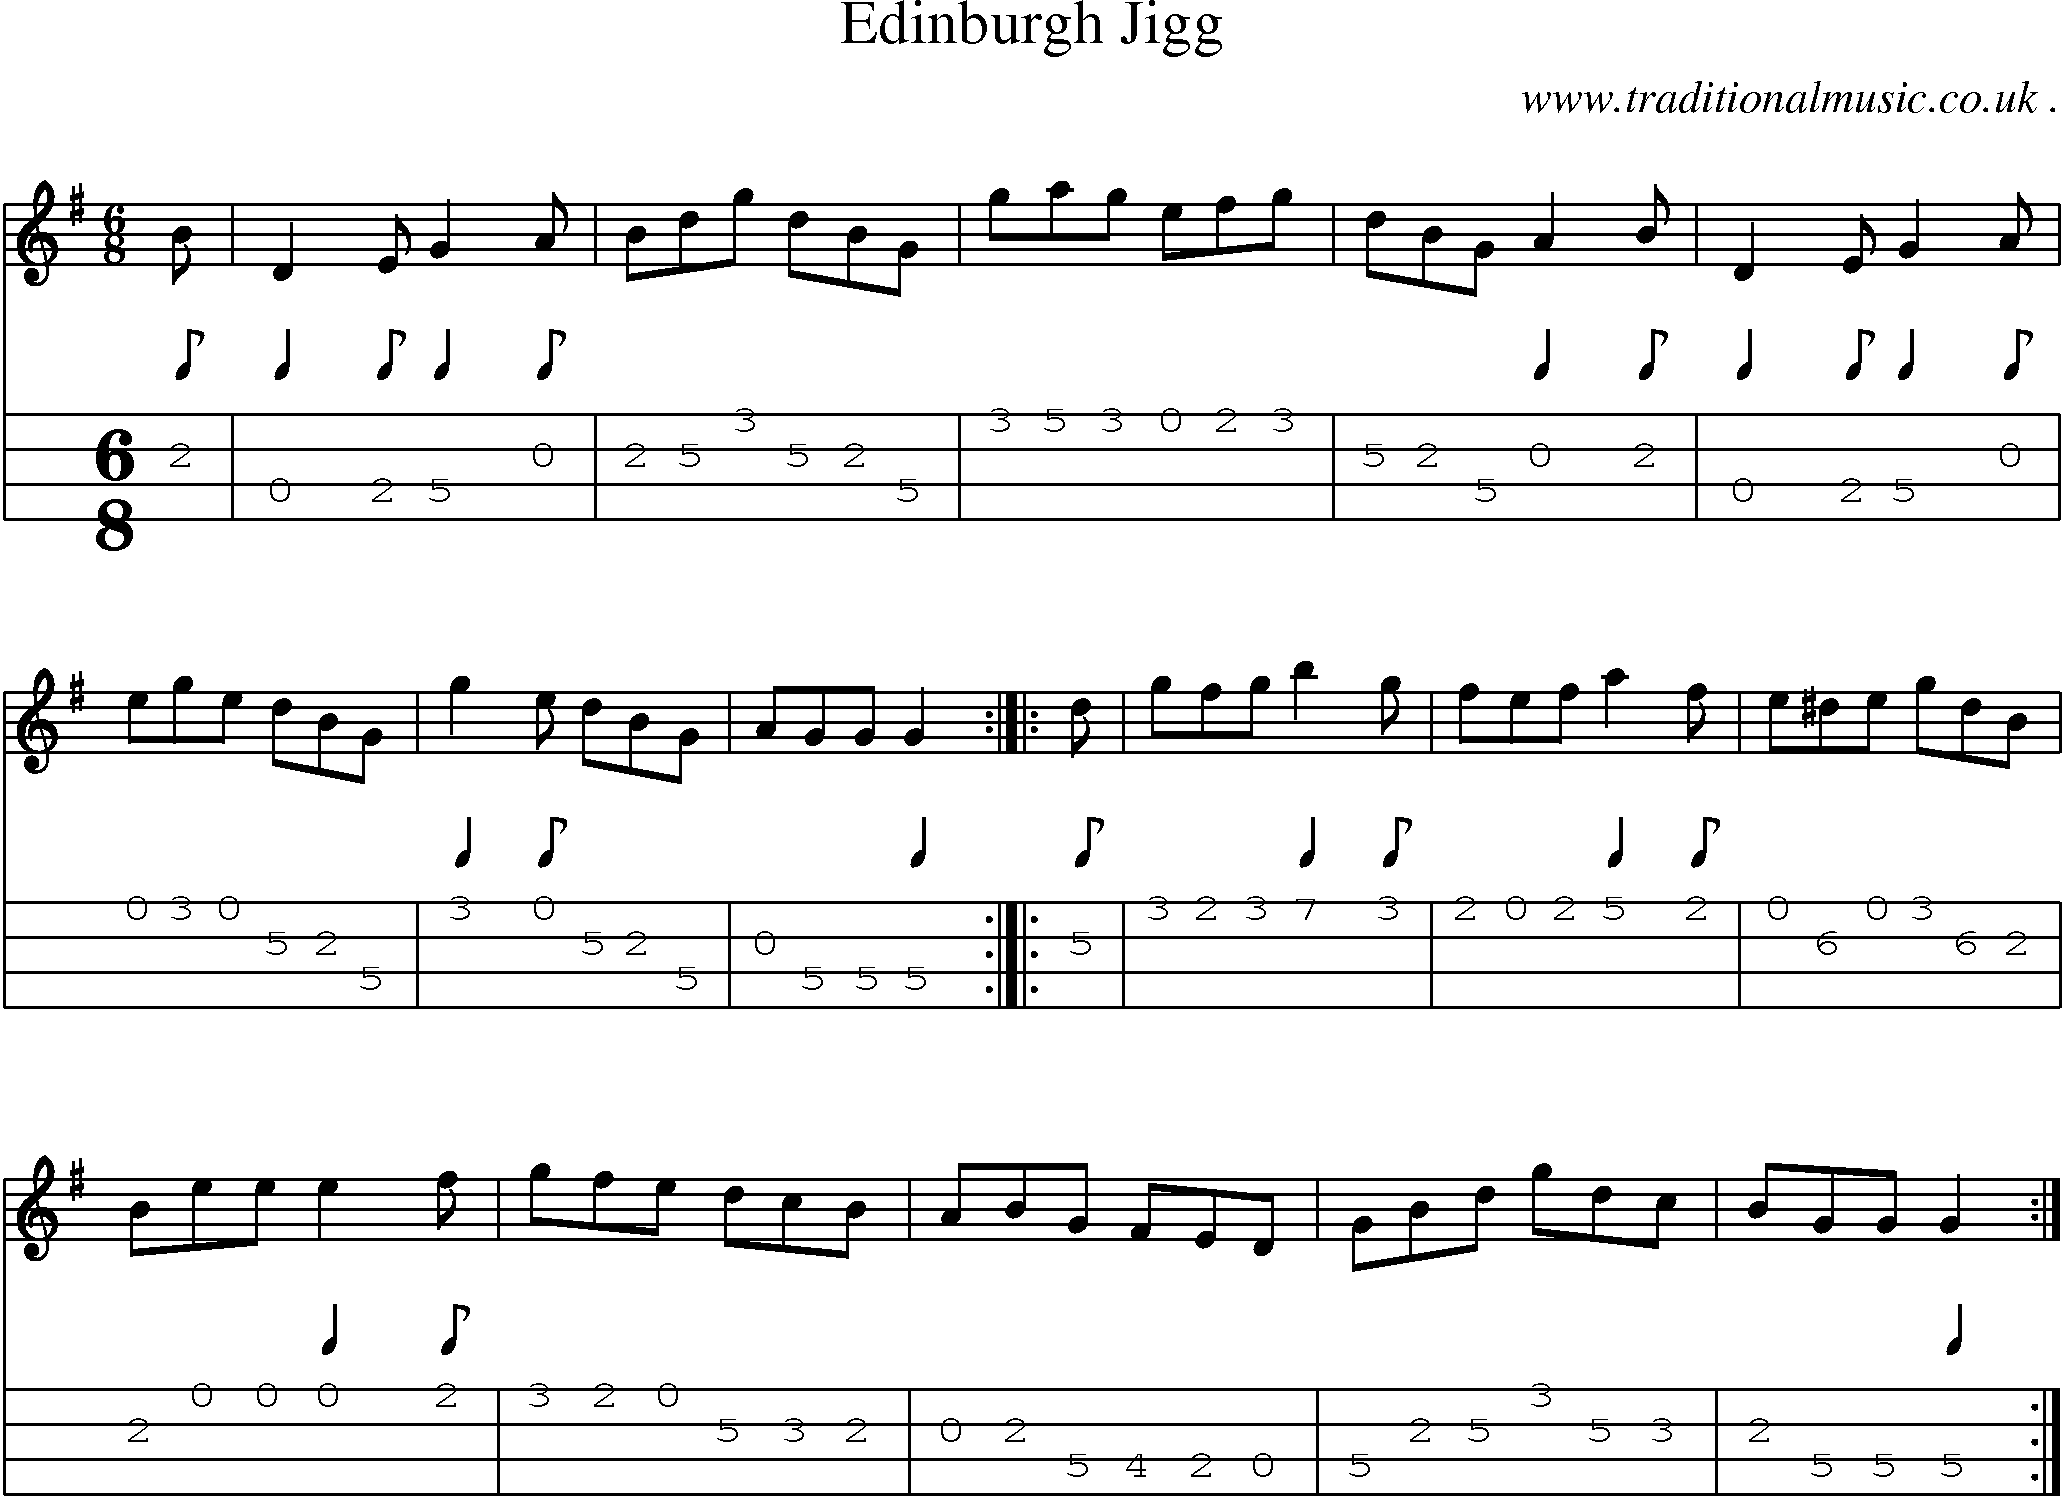 Sheet-Music and Mandolin Tabs for Edinburgh Jigg